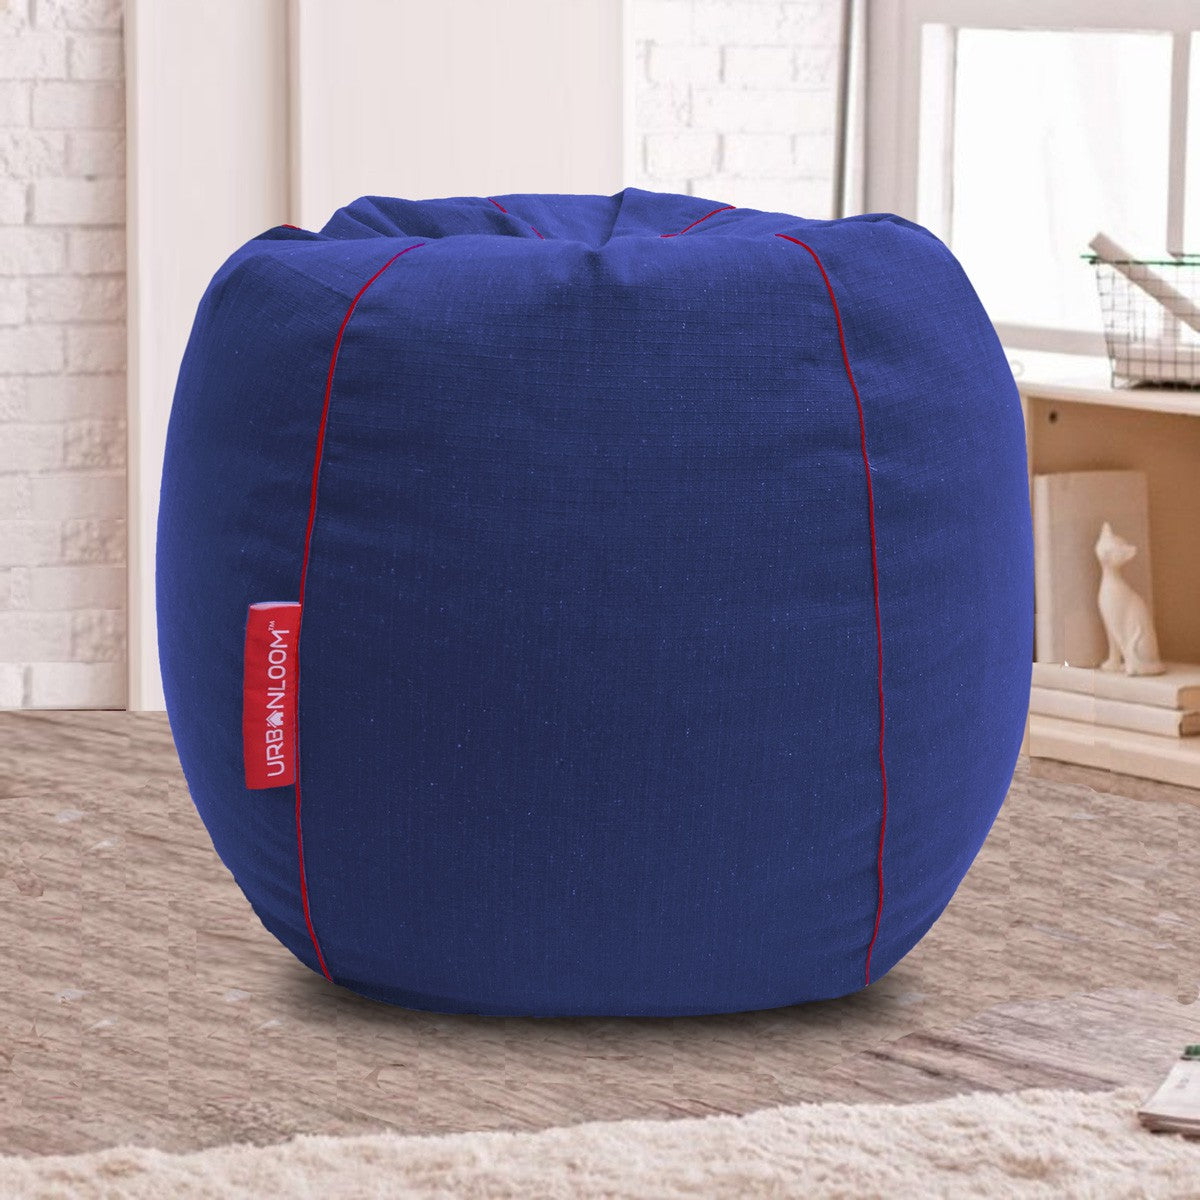 Hinto cotton handloom bean bag cover & Footstool cover